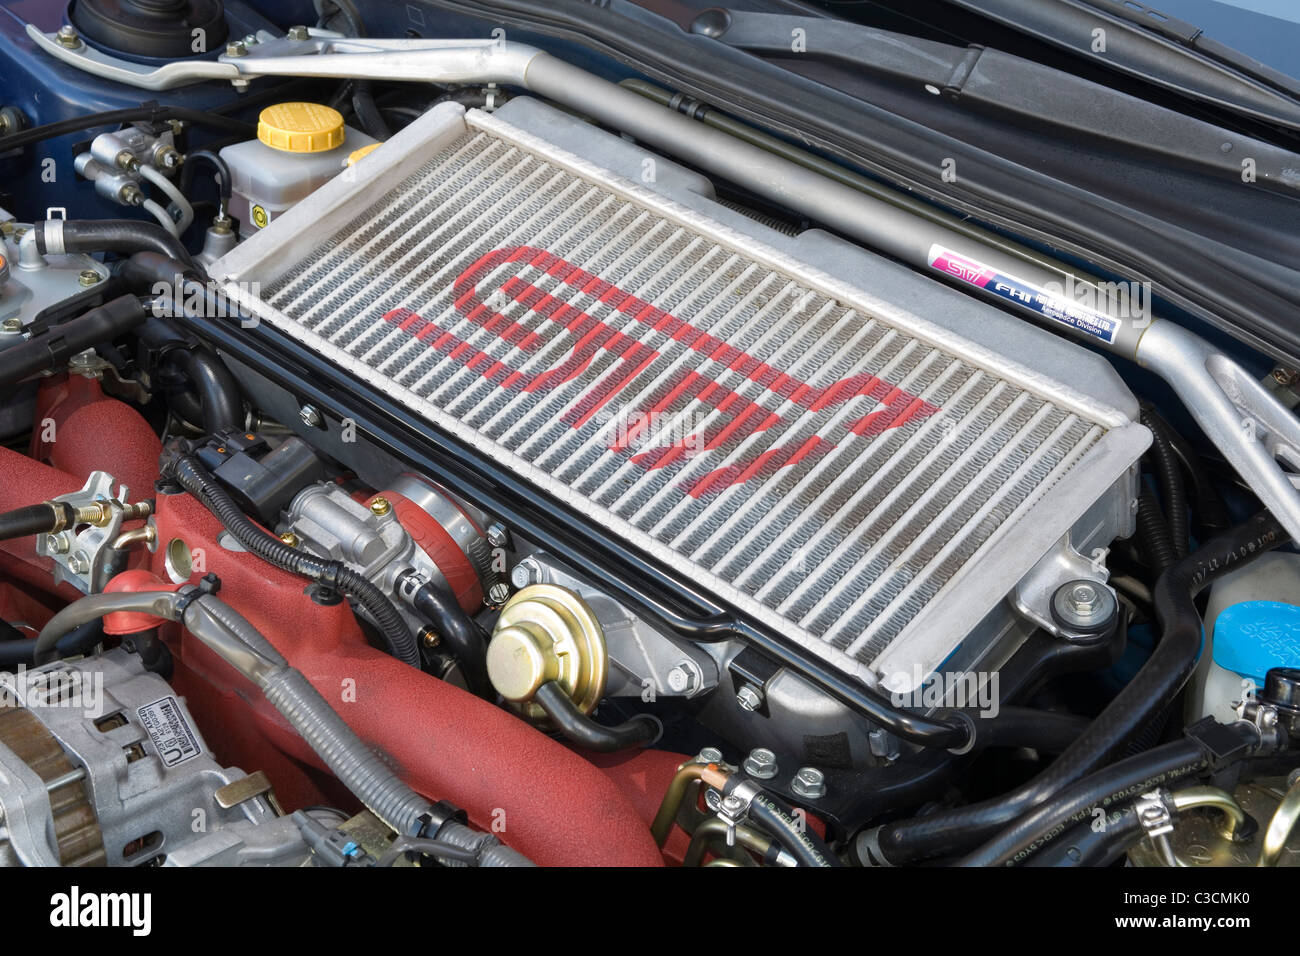 Turbocharger intercooler on top of the engine in a Subaru STi Imprezza Japanese sports car. Stock Photo